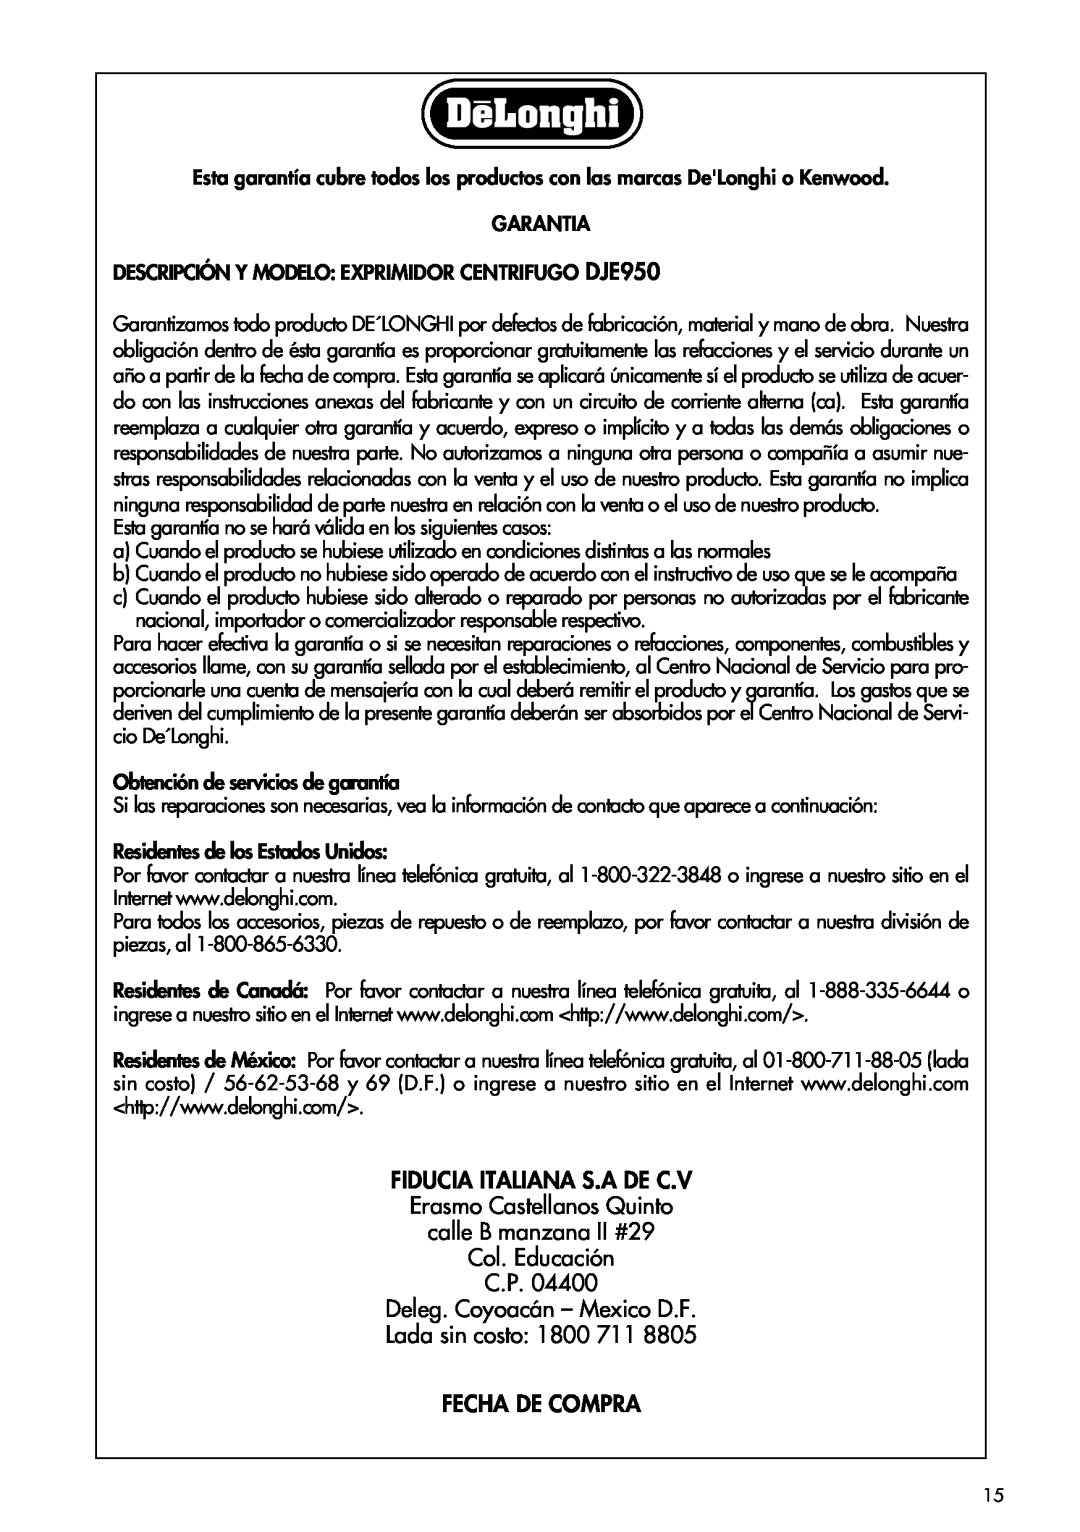 DeLonghi DJE950 manual Fiducia Italiana S.A De C.V, Erasmo Castellanos Quinto calle B manzana II #29, Col. Educación C.P 